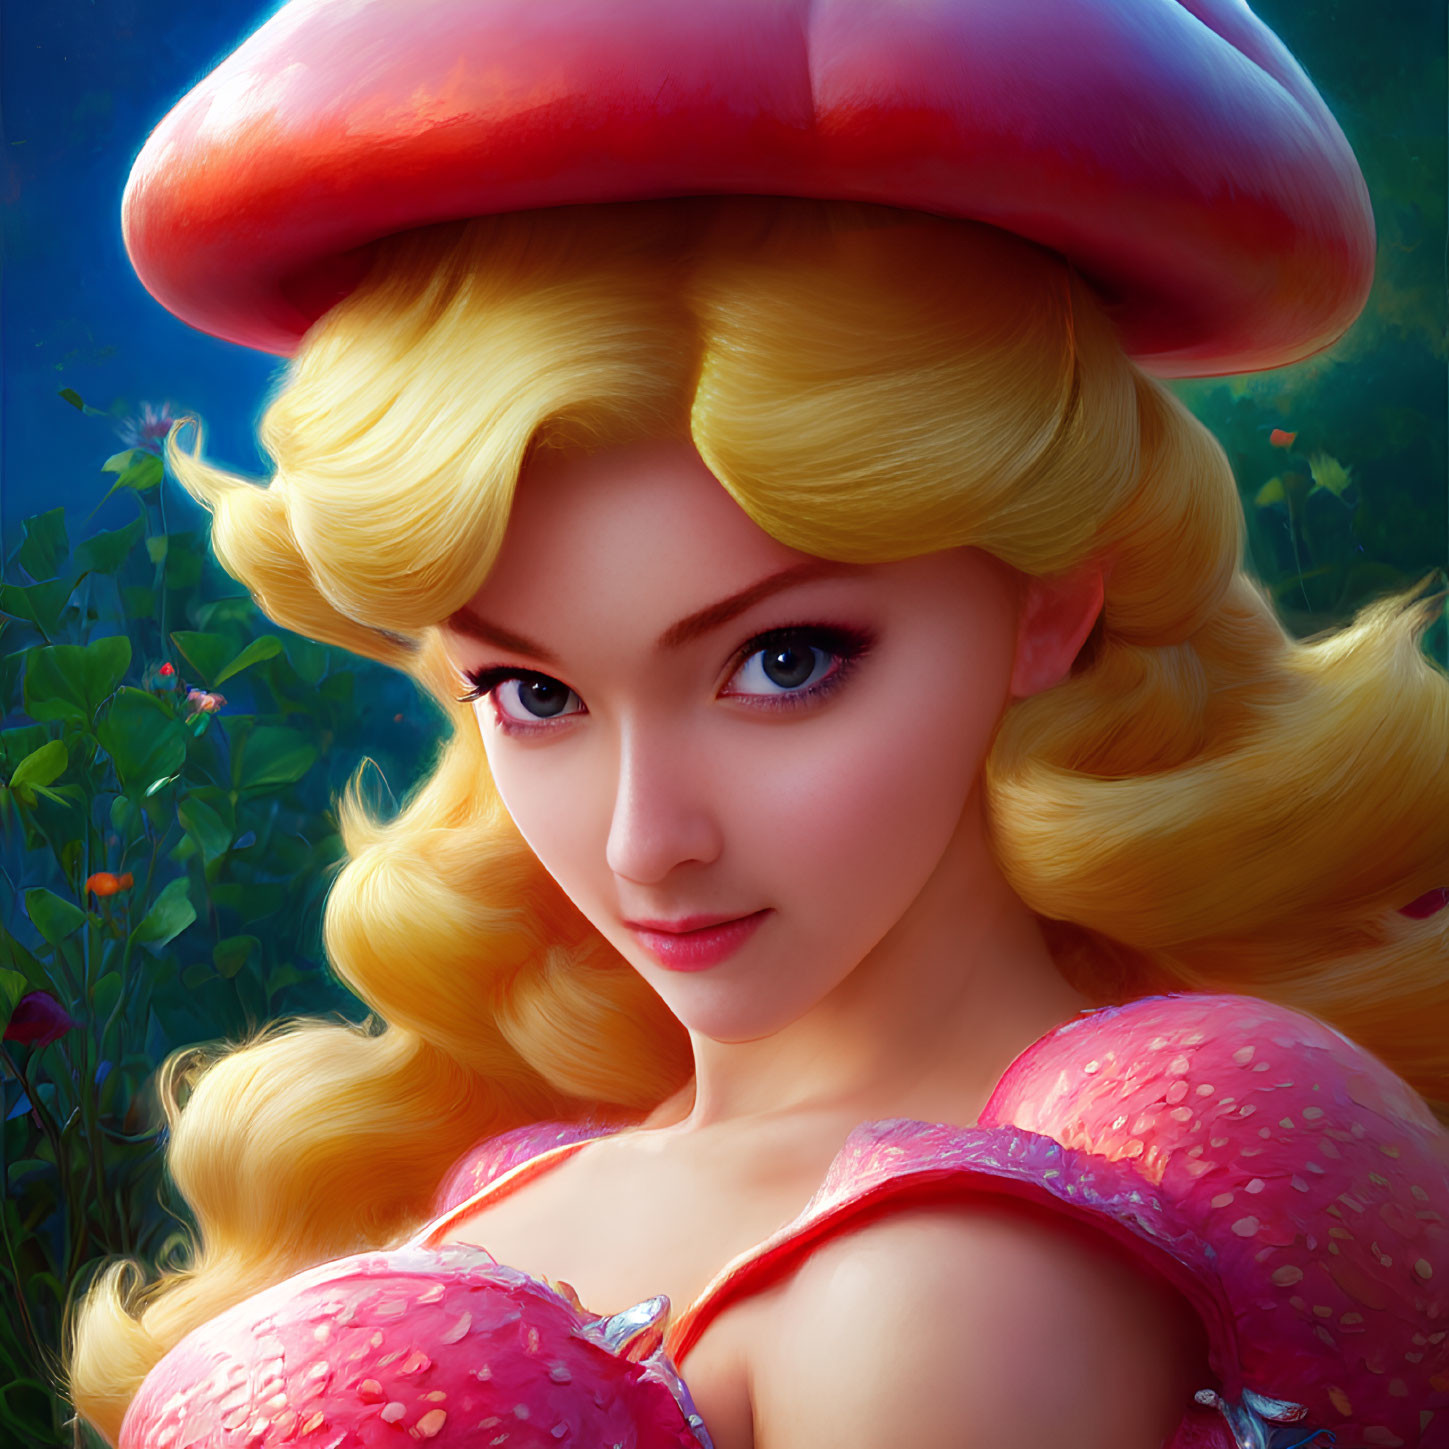 Digital artwork of woman in mushroom hat and red dress against fantasy woodland.